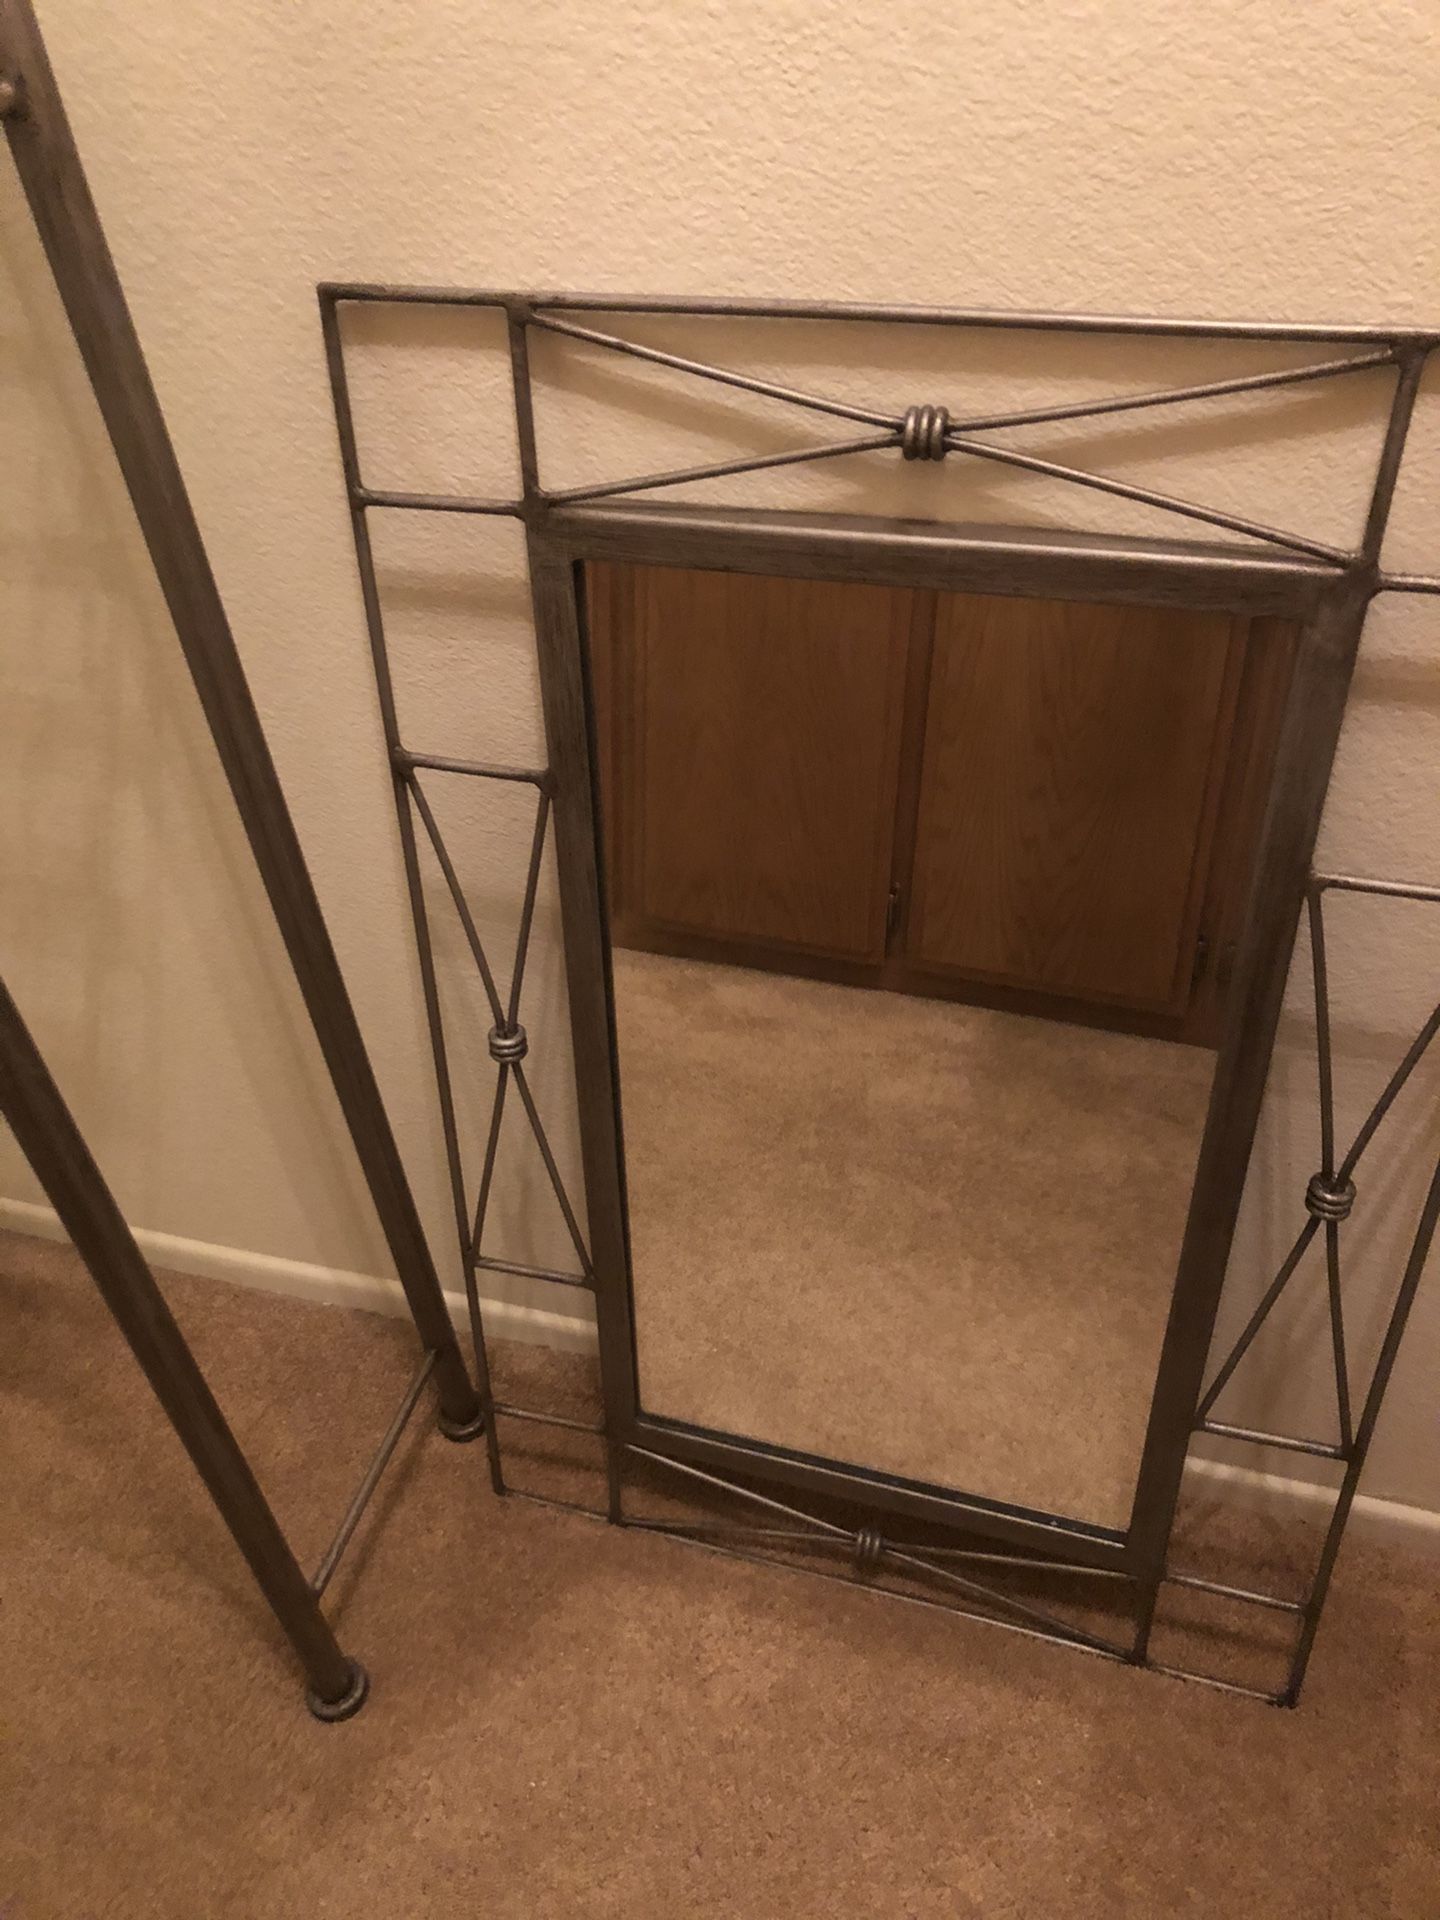 Over the toilet wrought iron storage rack plus matching mirror